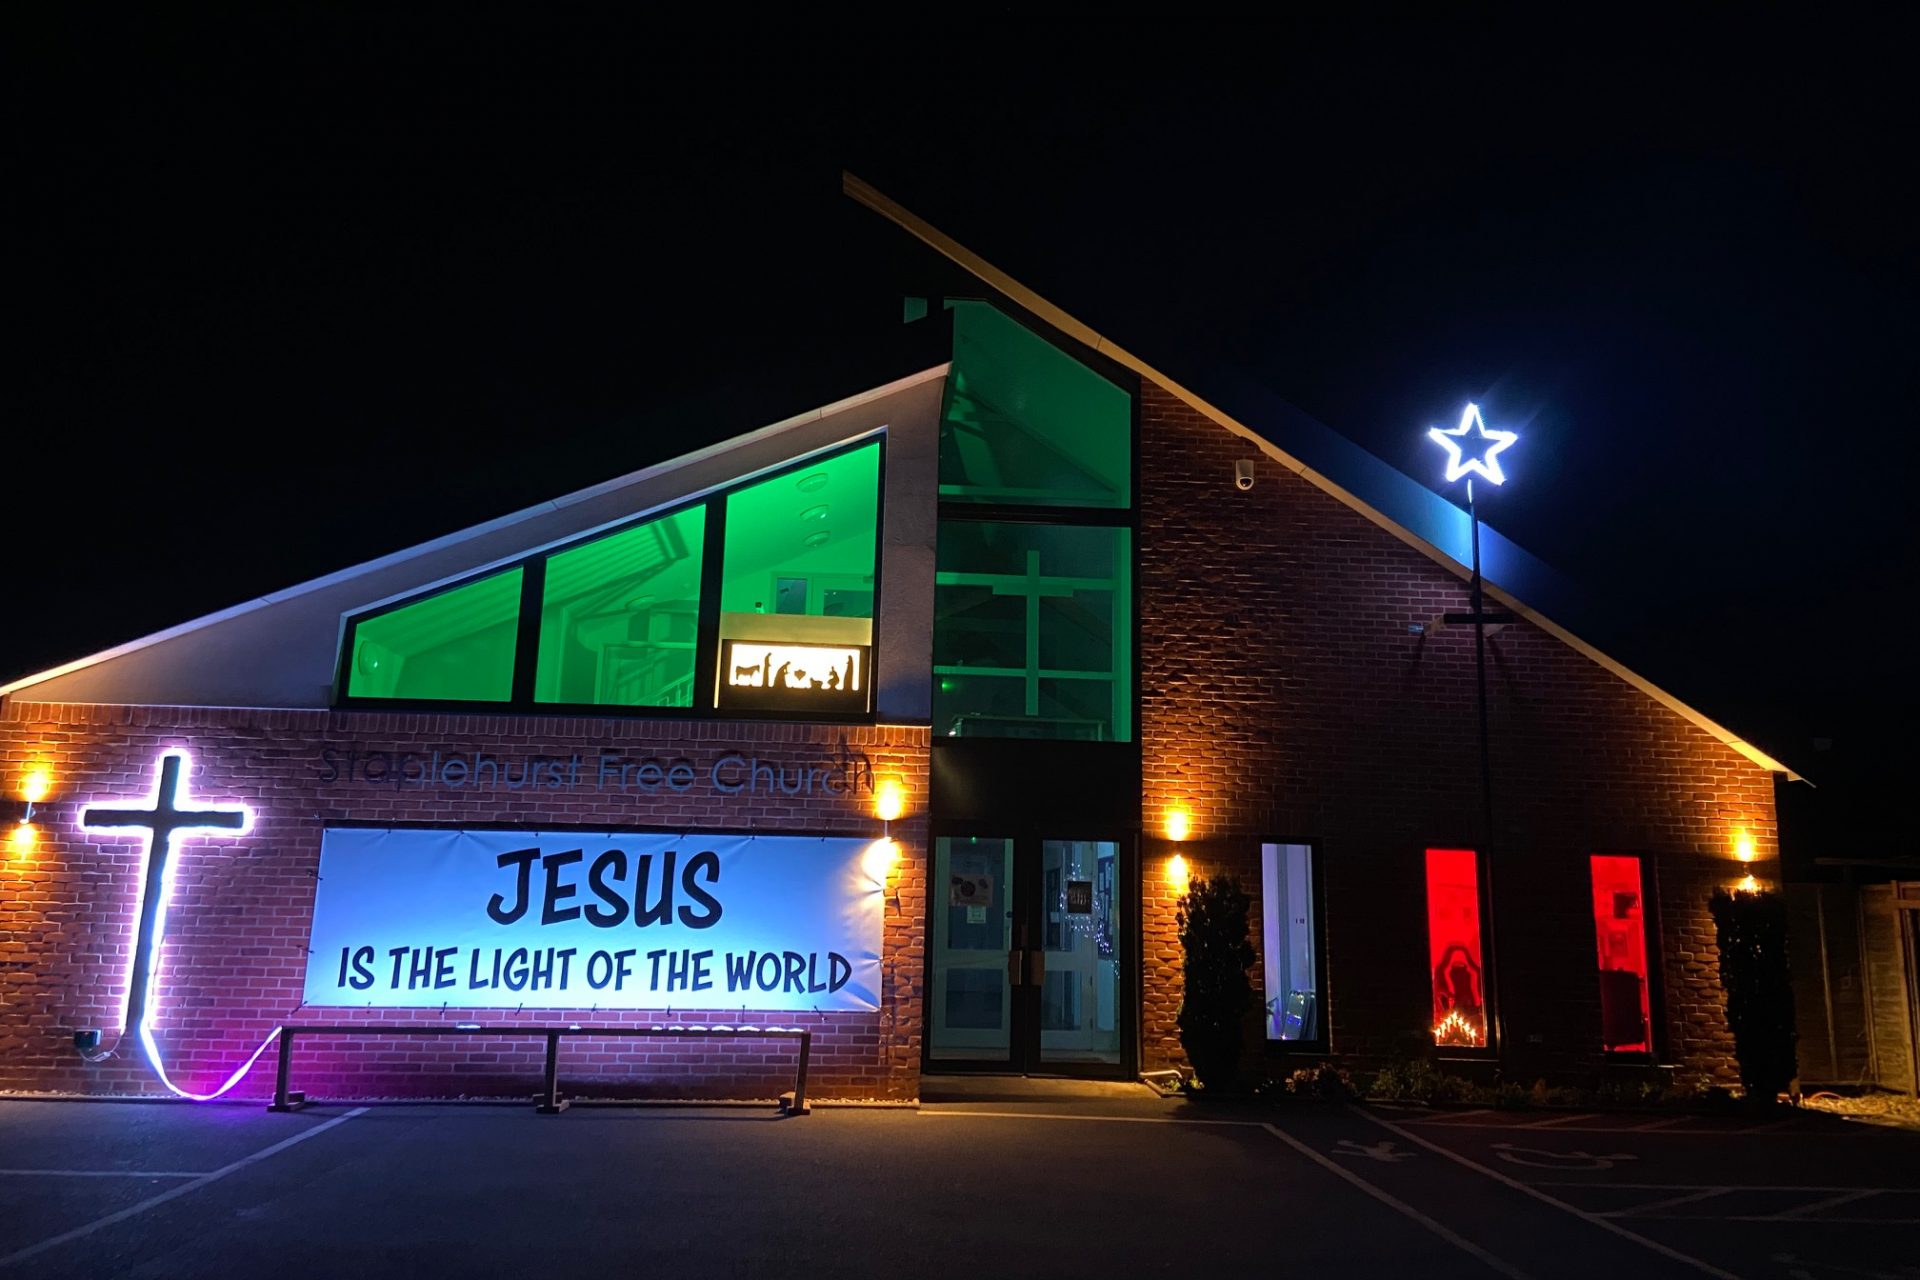 Jesus light of the world